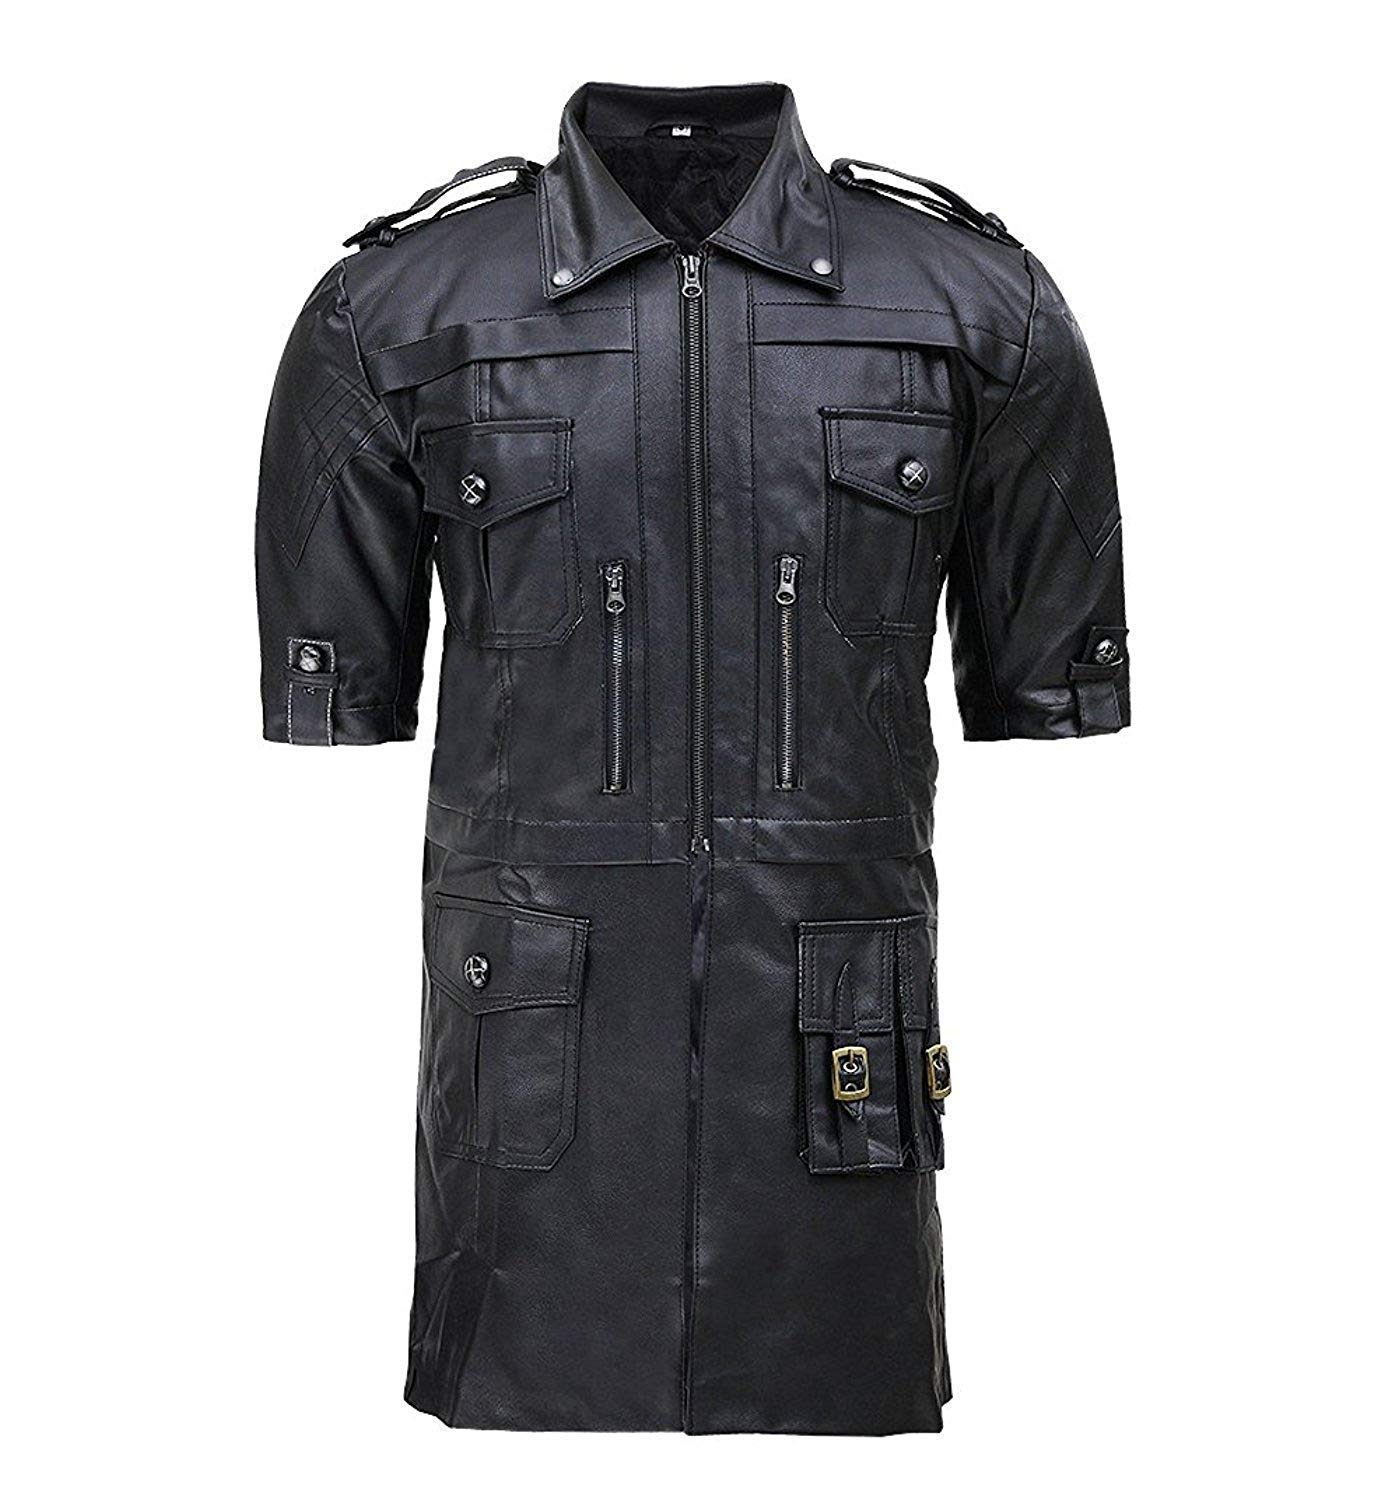 III-Fashions Mens Fantasy XV Noctis Lucis Caelum Jacket - Black Synthetic Leather Jacket Cosplay Costume